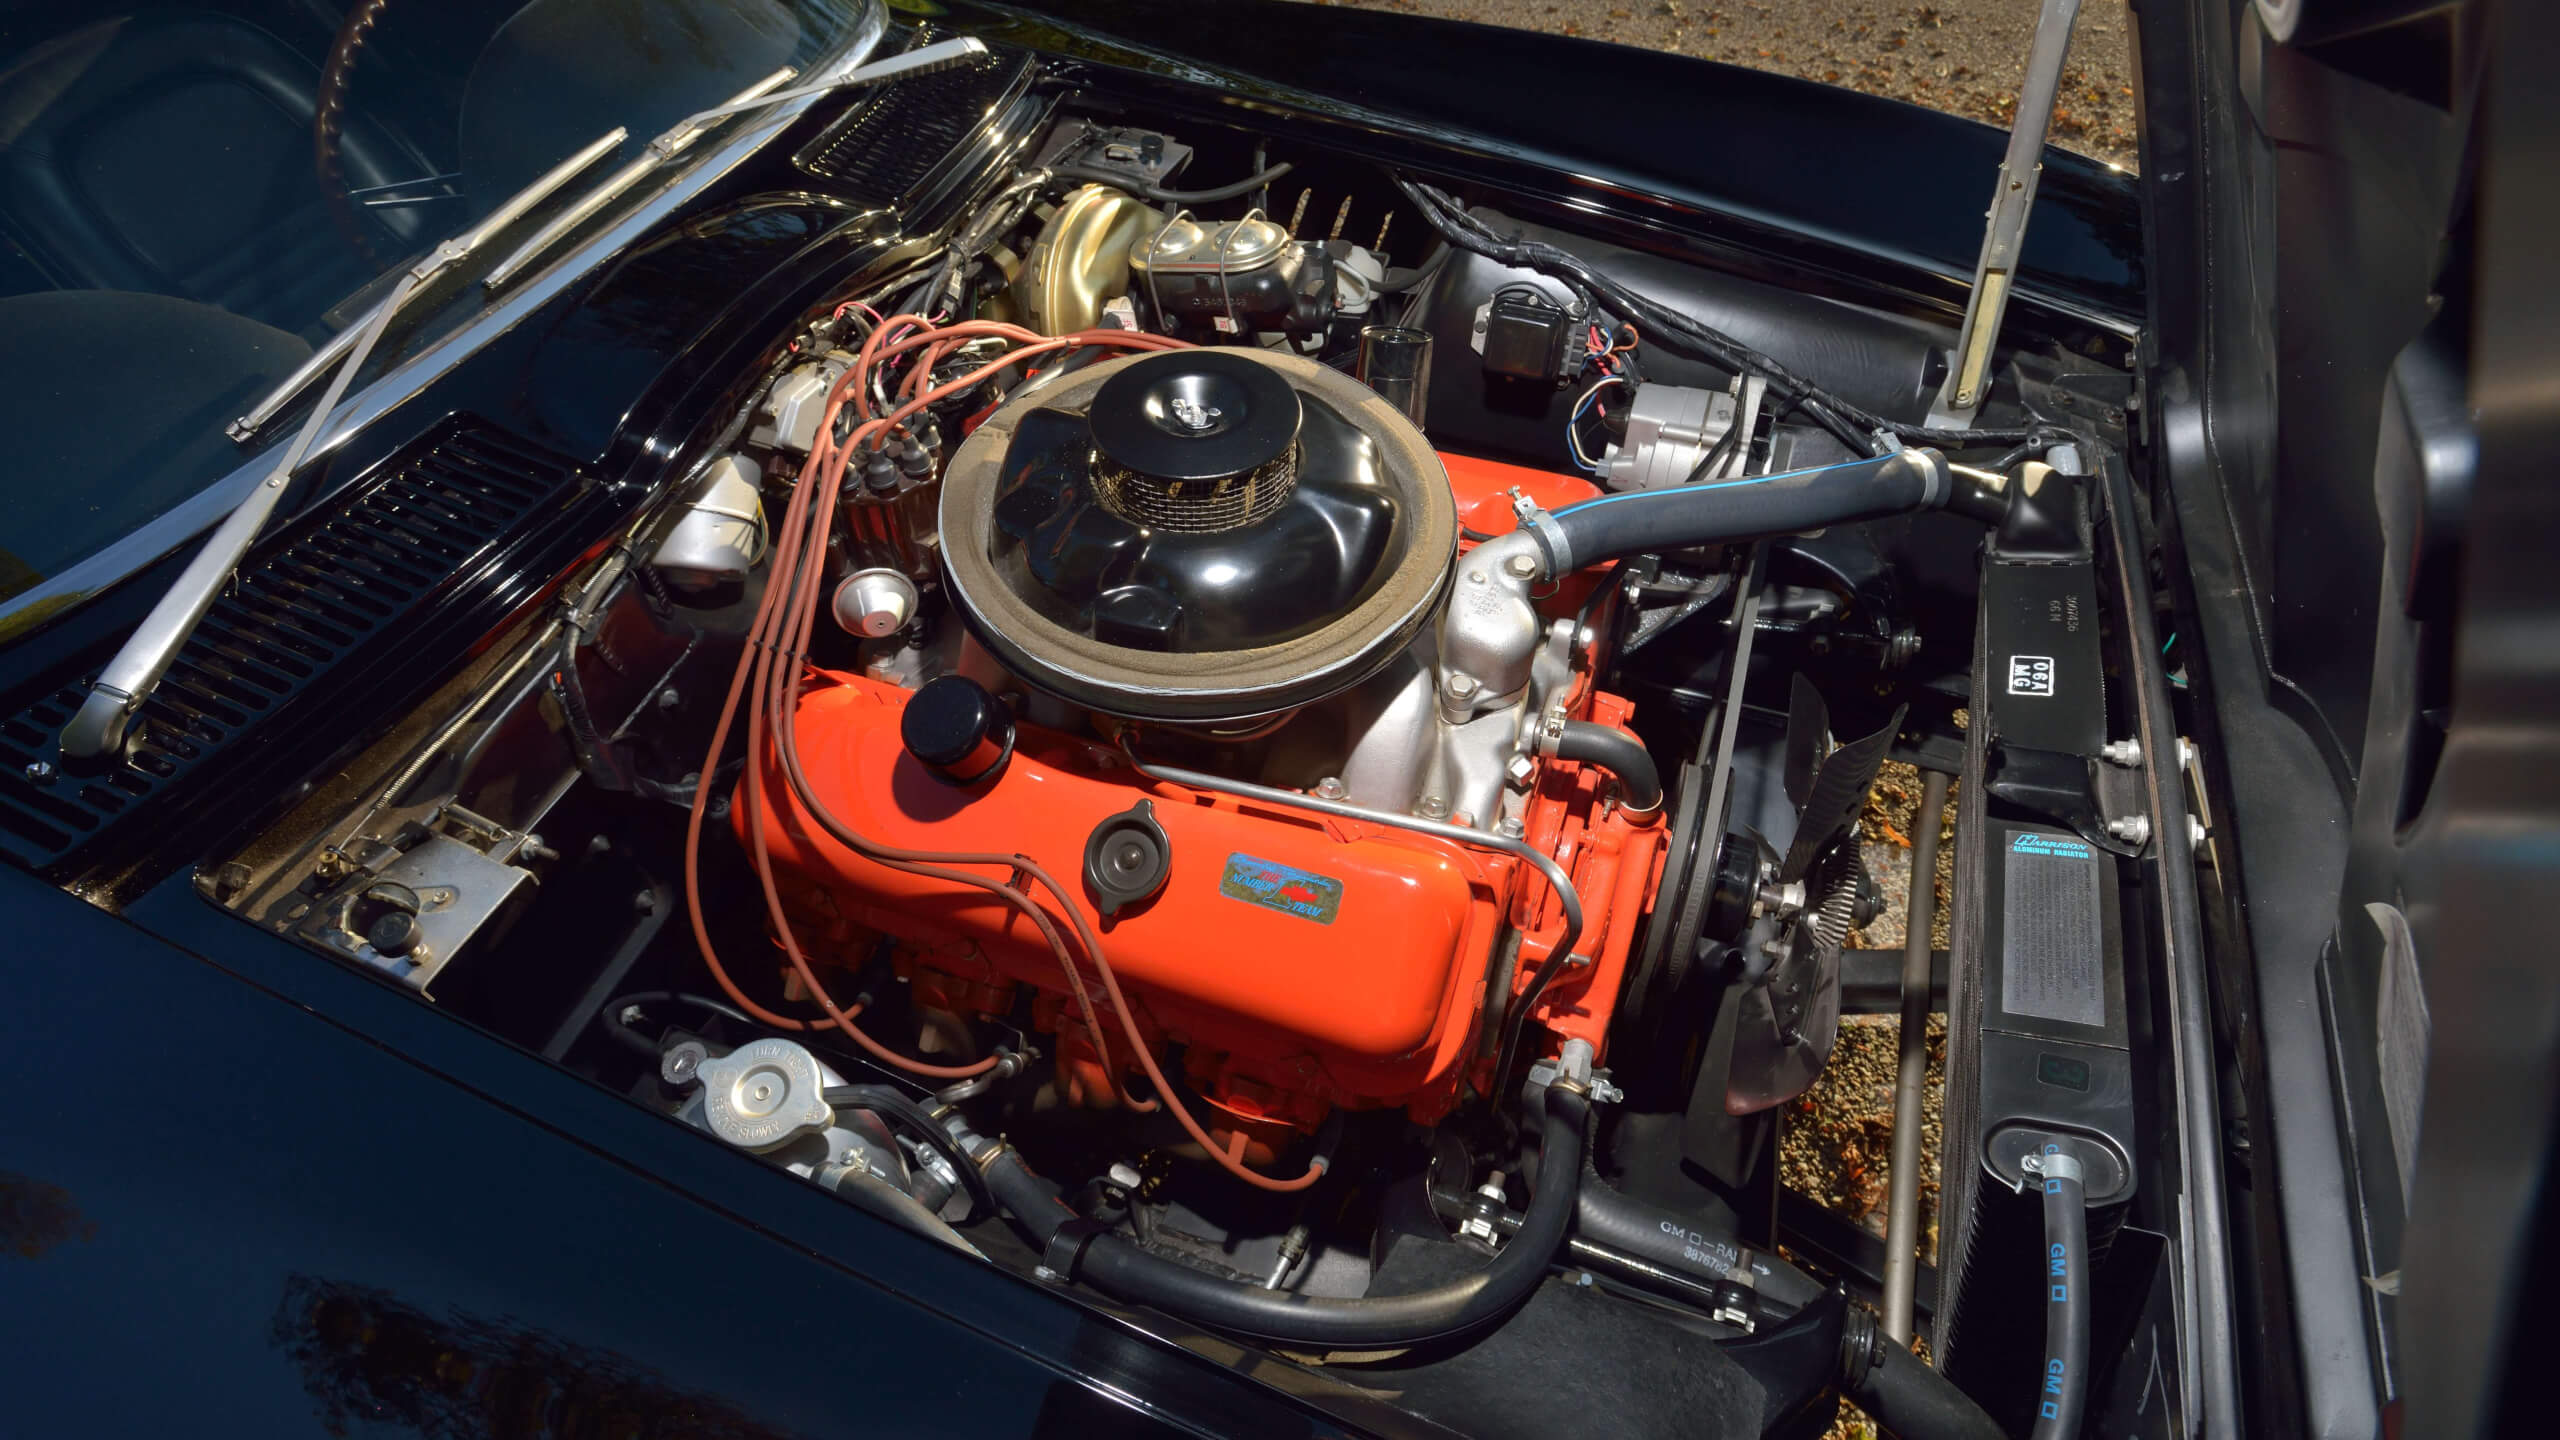 1967 Corvette Convertible - Tuxedo Black - First L88 Corvette